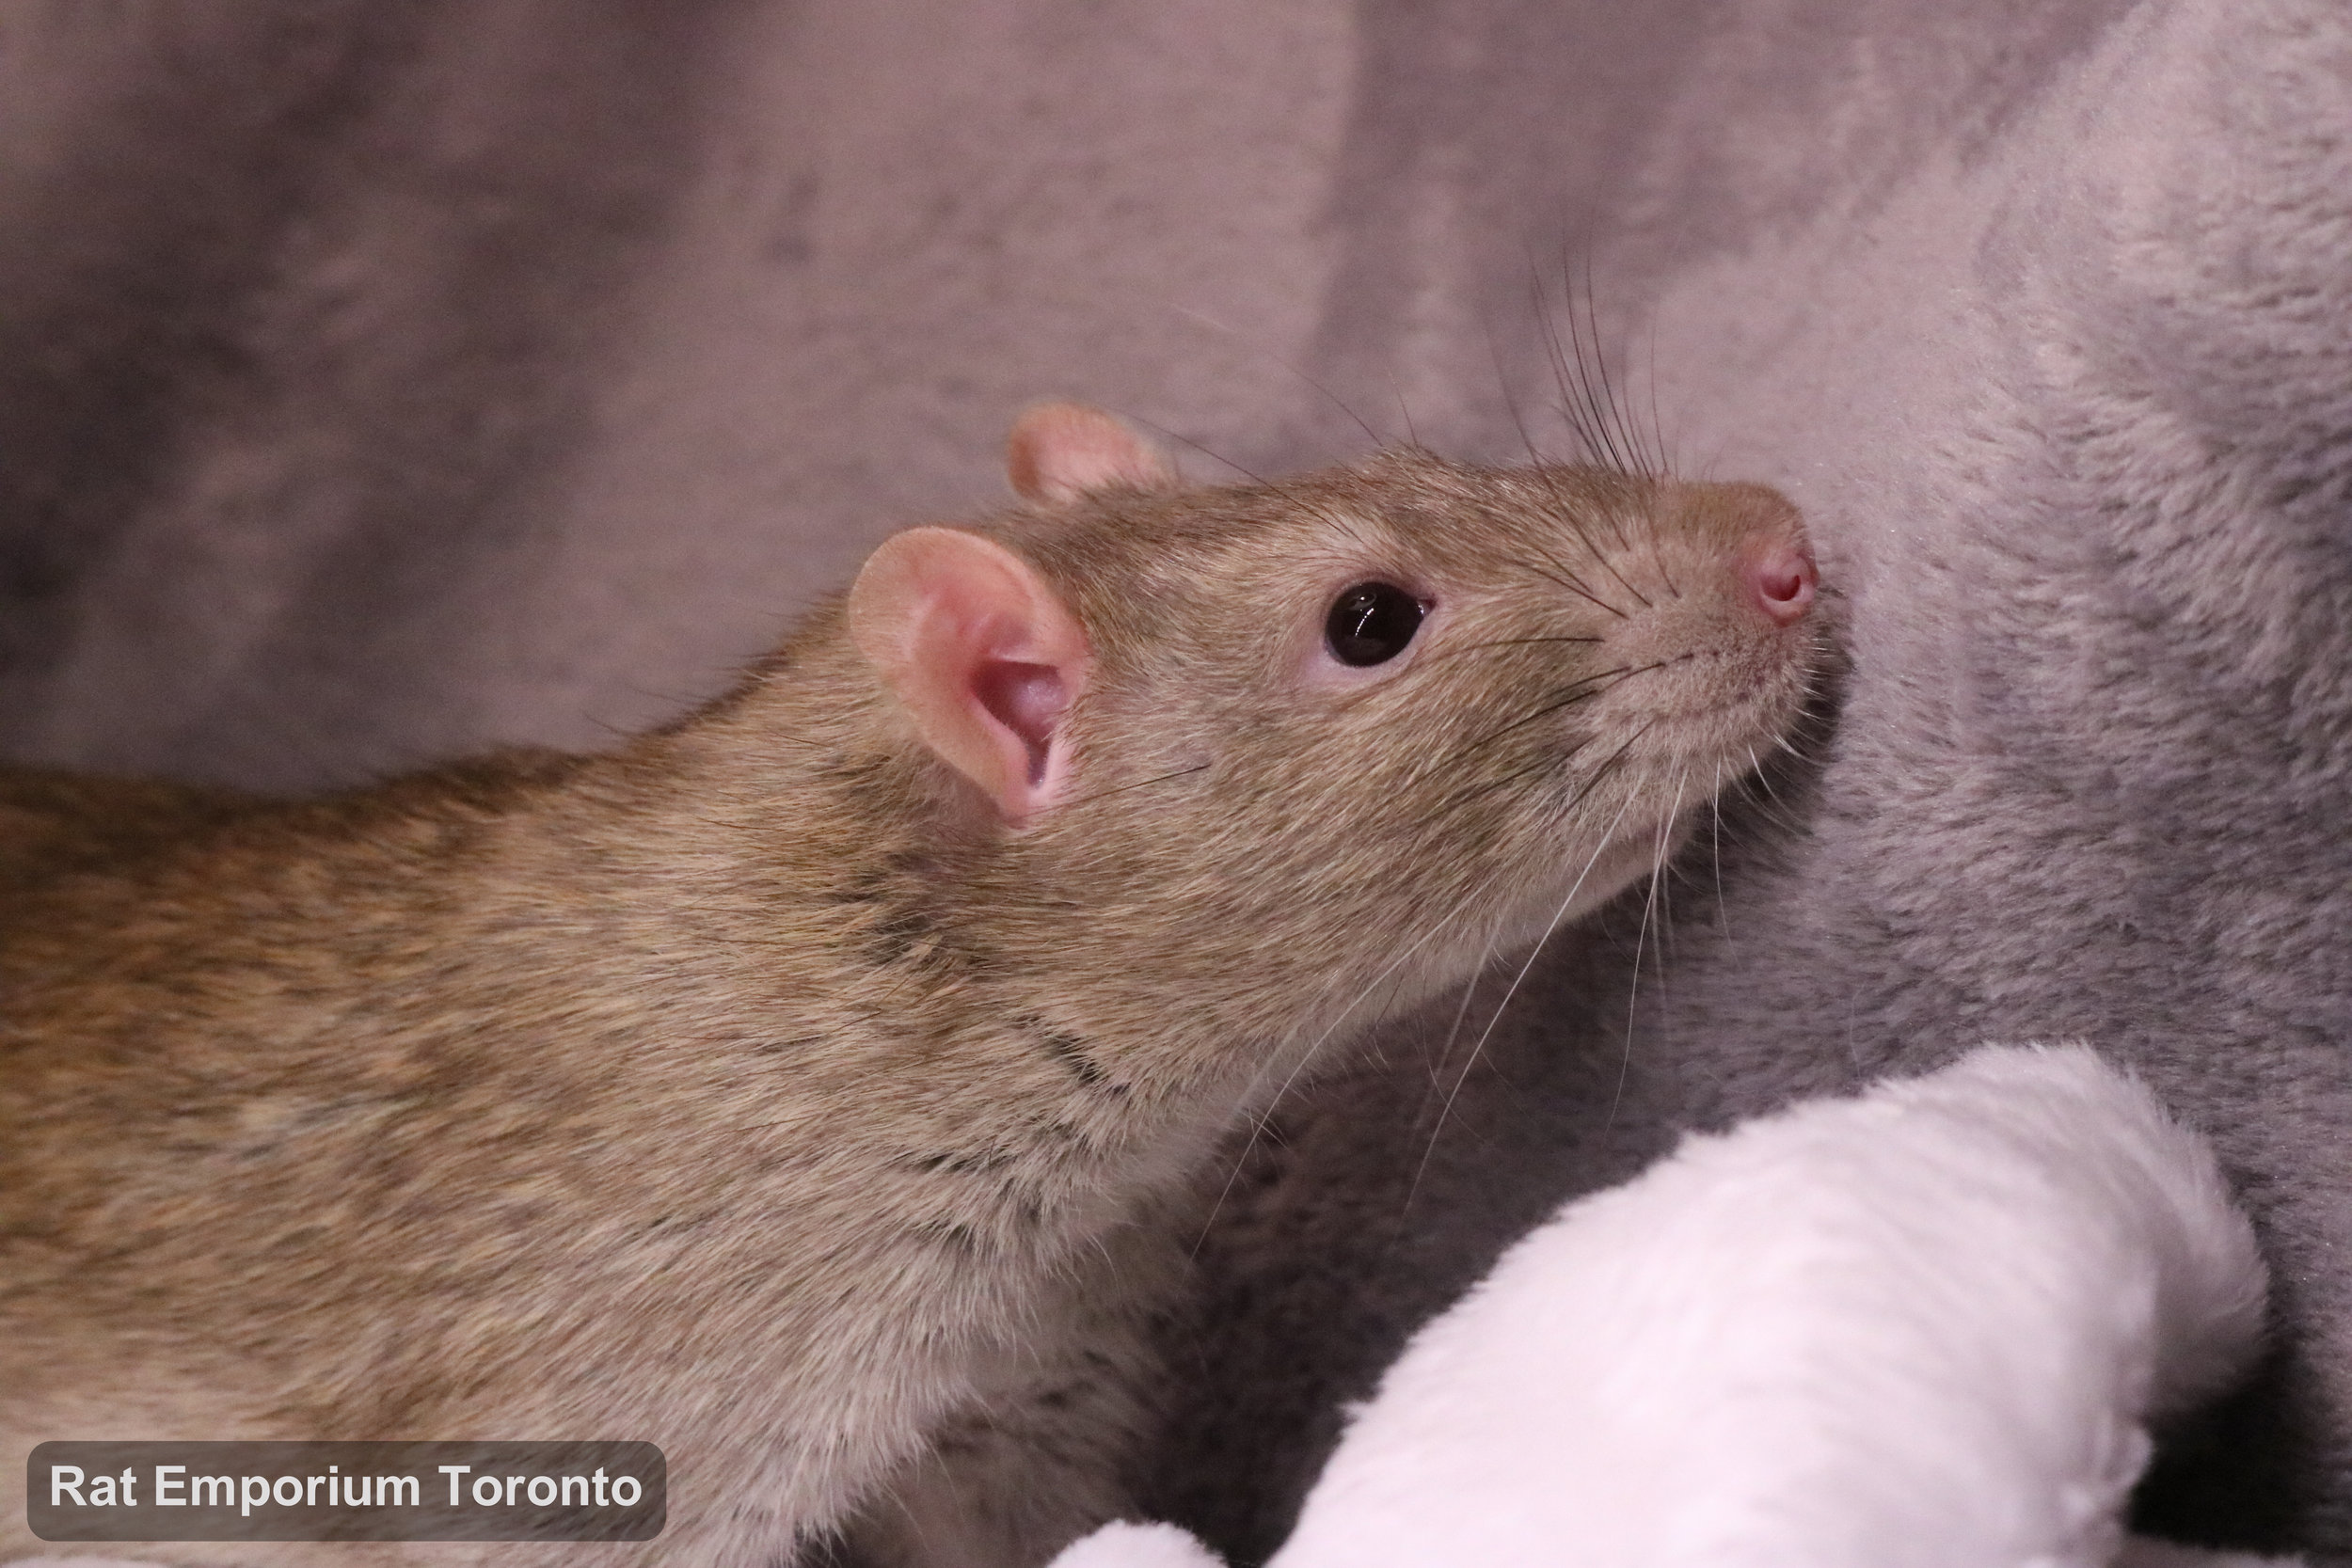 Crisp, my cinnamon top eared rat - born and raised at the Rat Emporium Toronto - adopt pet rats - rat breeder